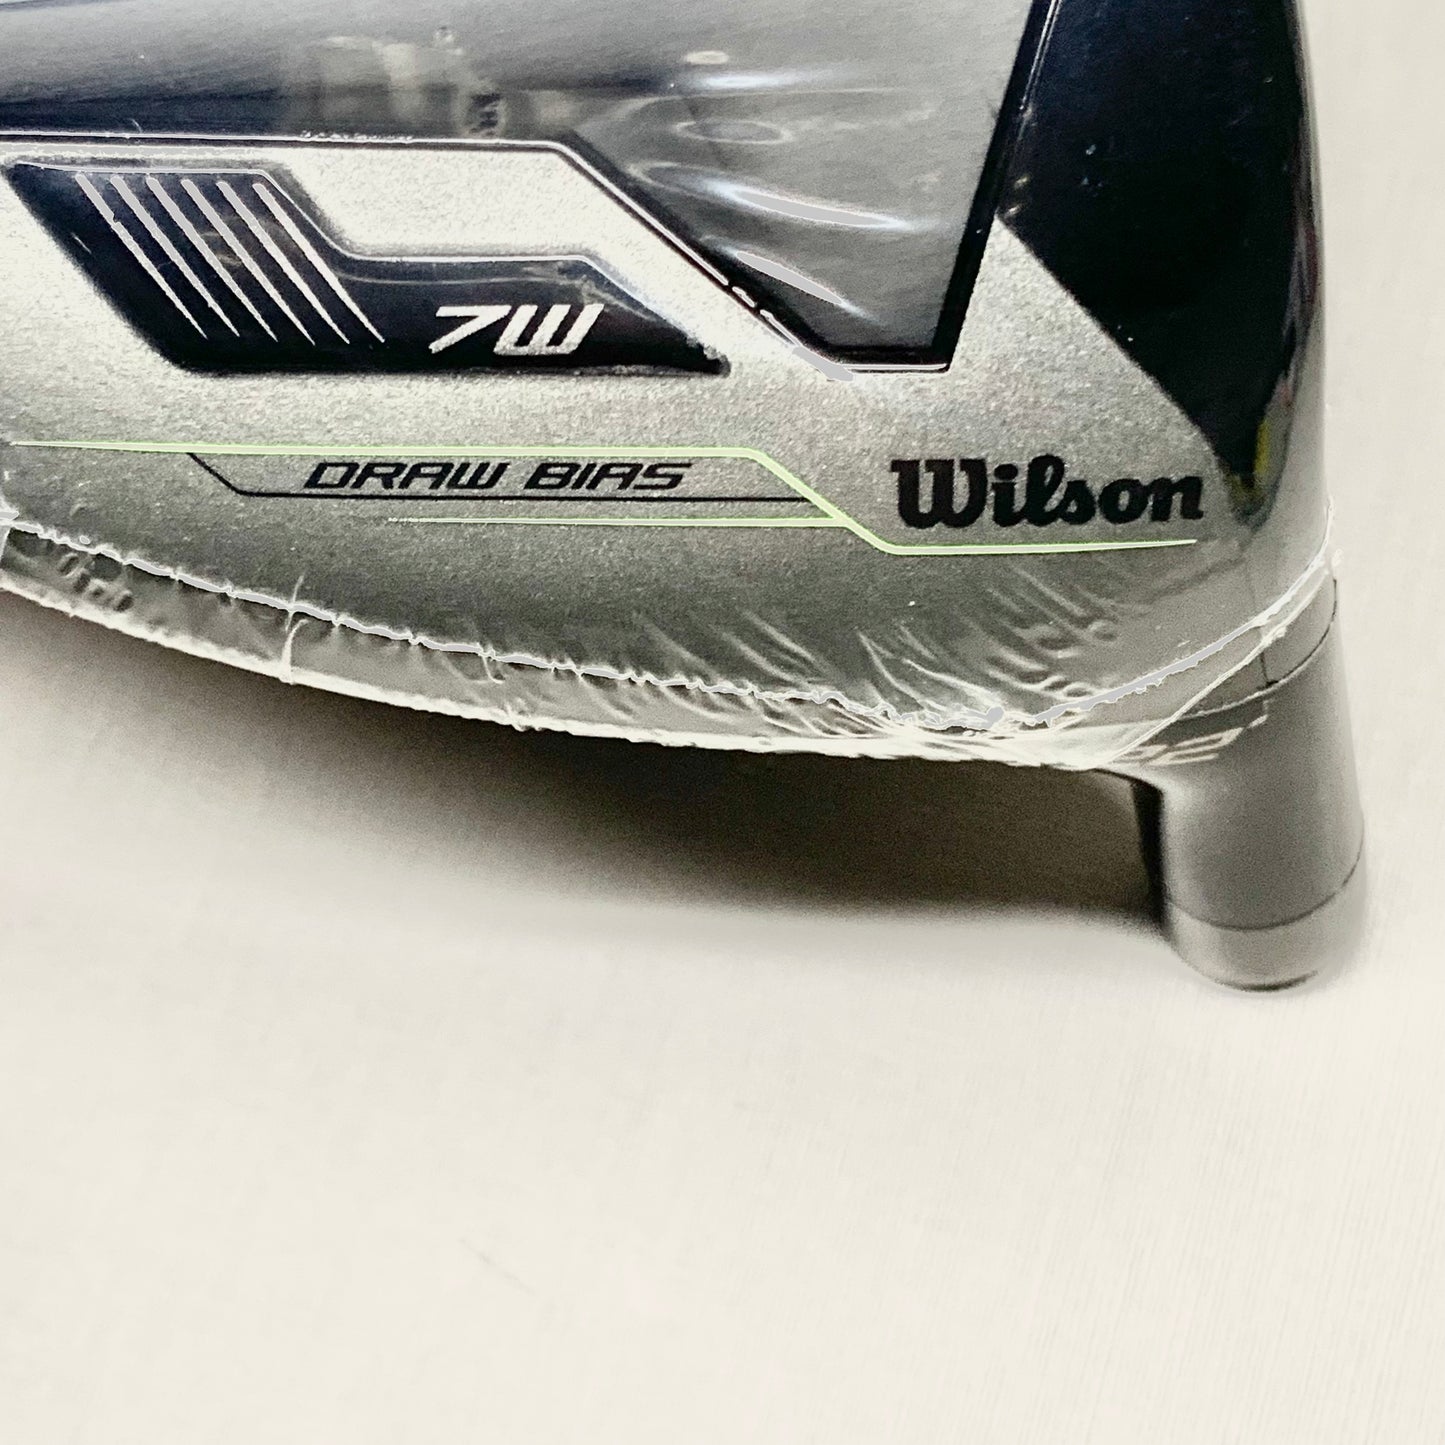 WILSON Launch Pad2 Fybrid MRH Driver 22 Right Hand Golf Club Head Only (New)